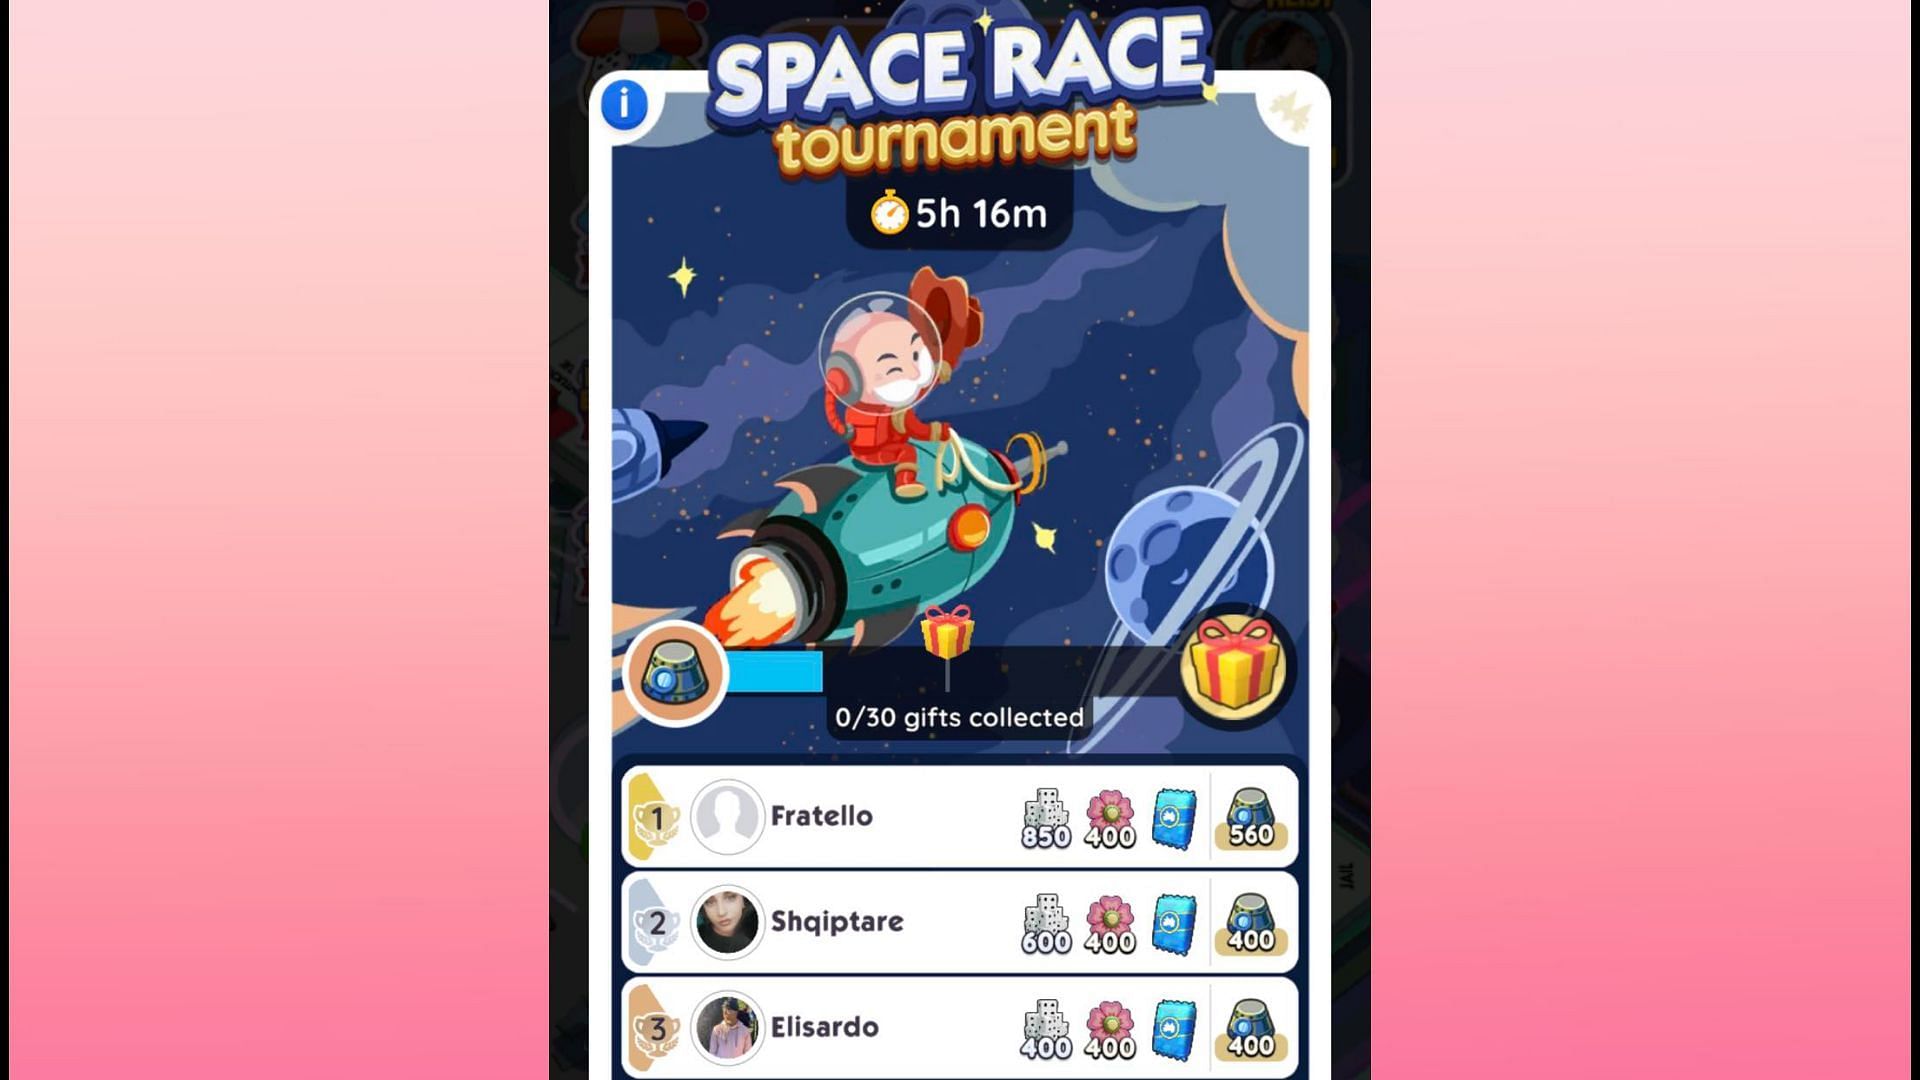 Monopoly Go Space Race tournament rewards (Image via Scopely)